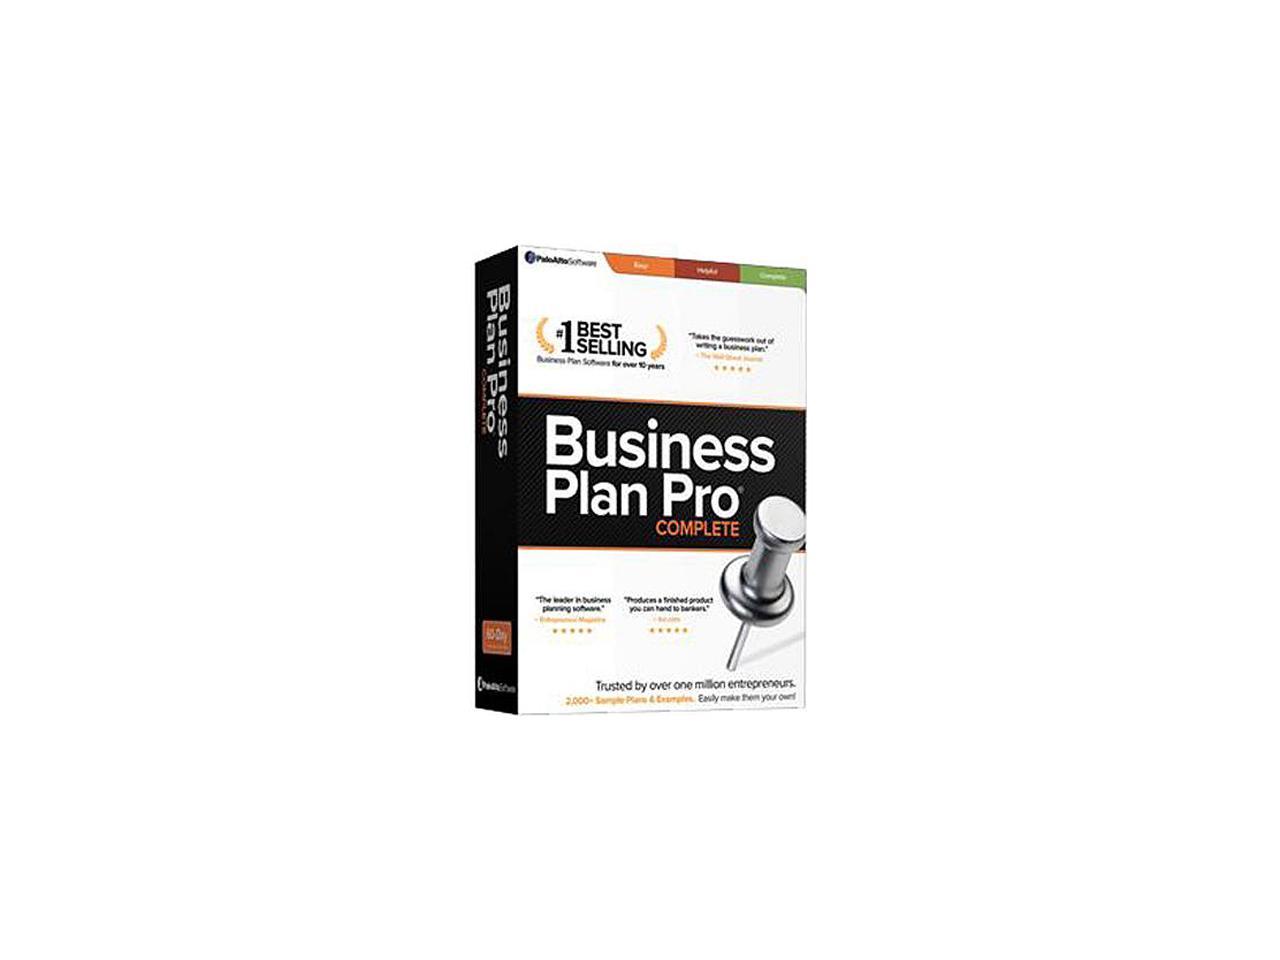 palo alto business plan pro software free download